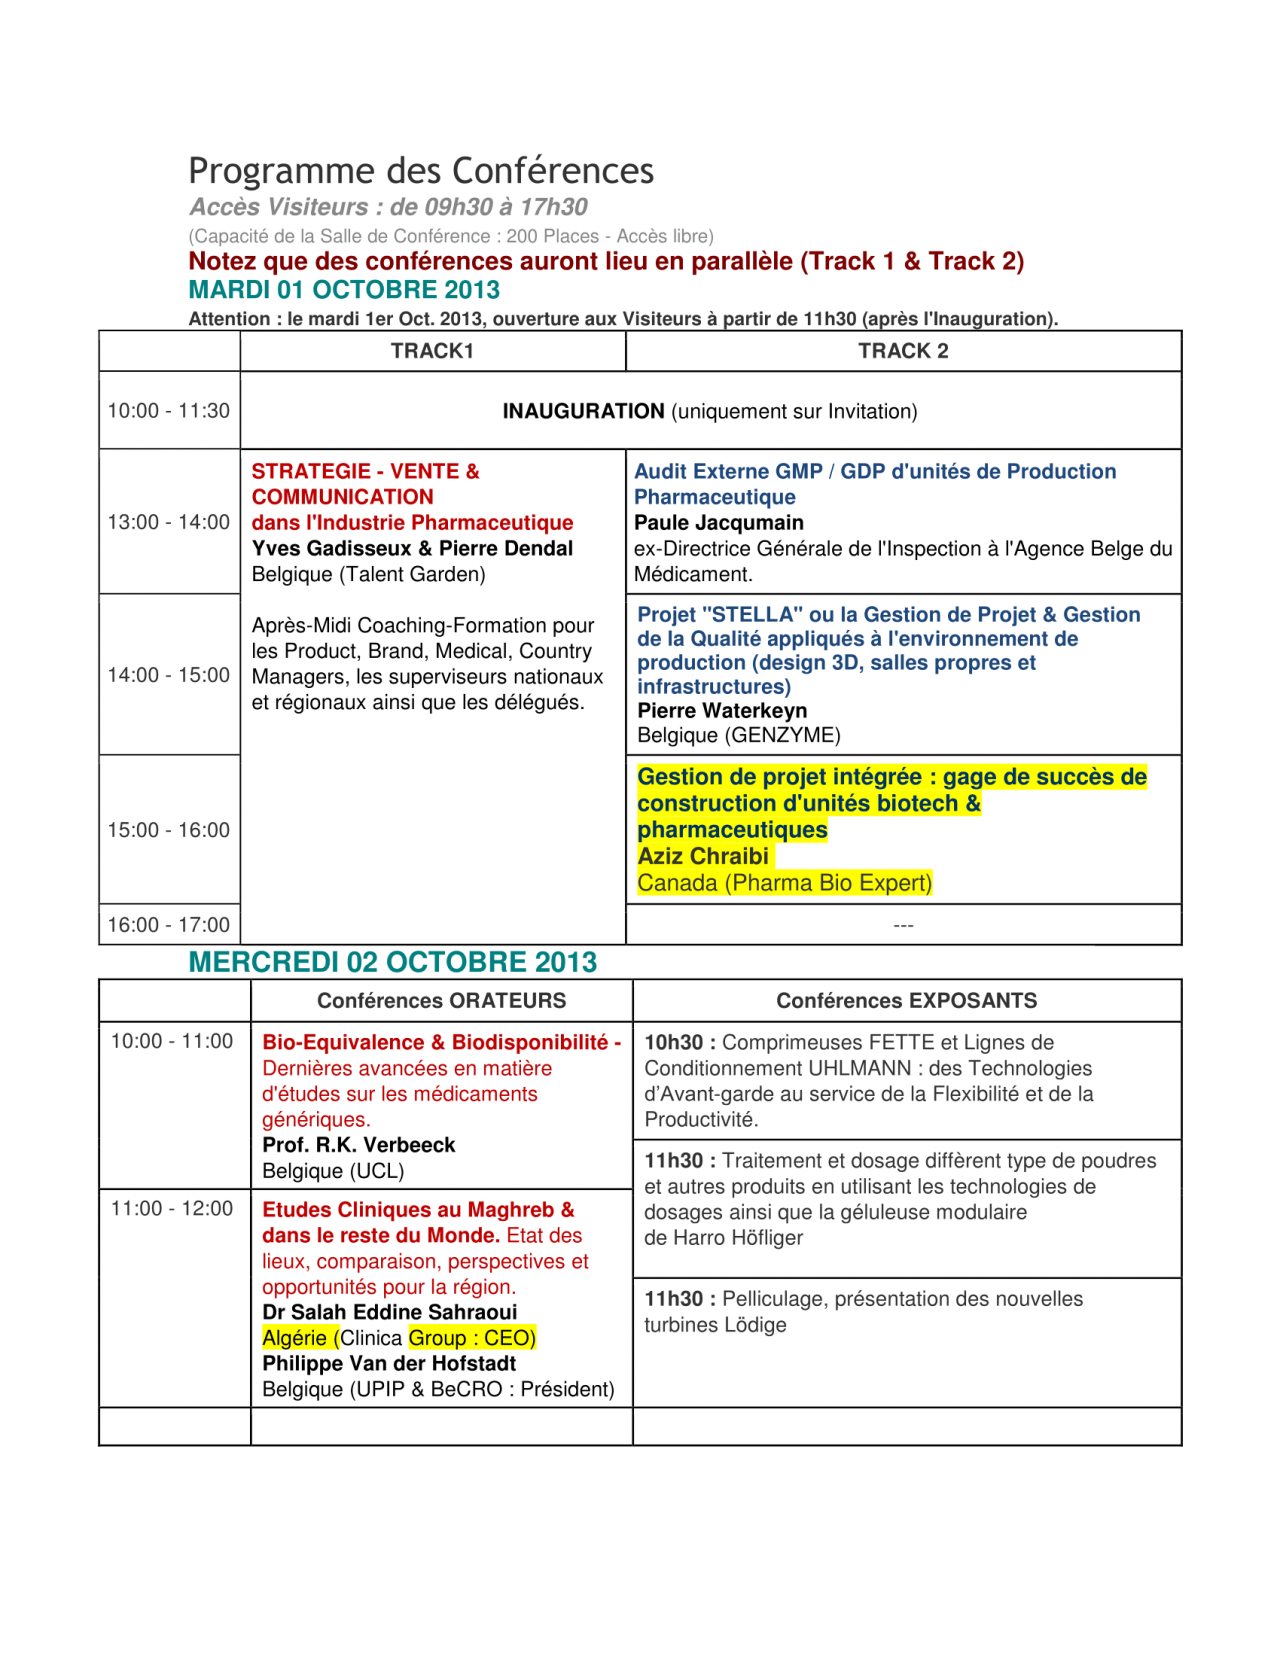 Programme des Conférences_MAGHREB PHARMA 2013 ORAN-1